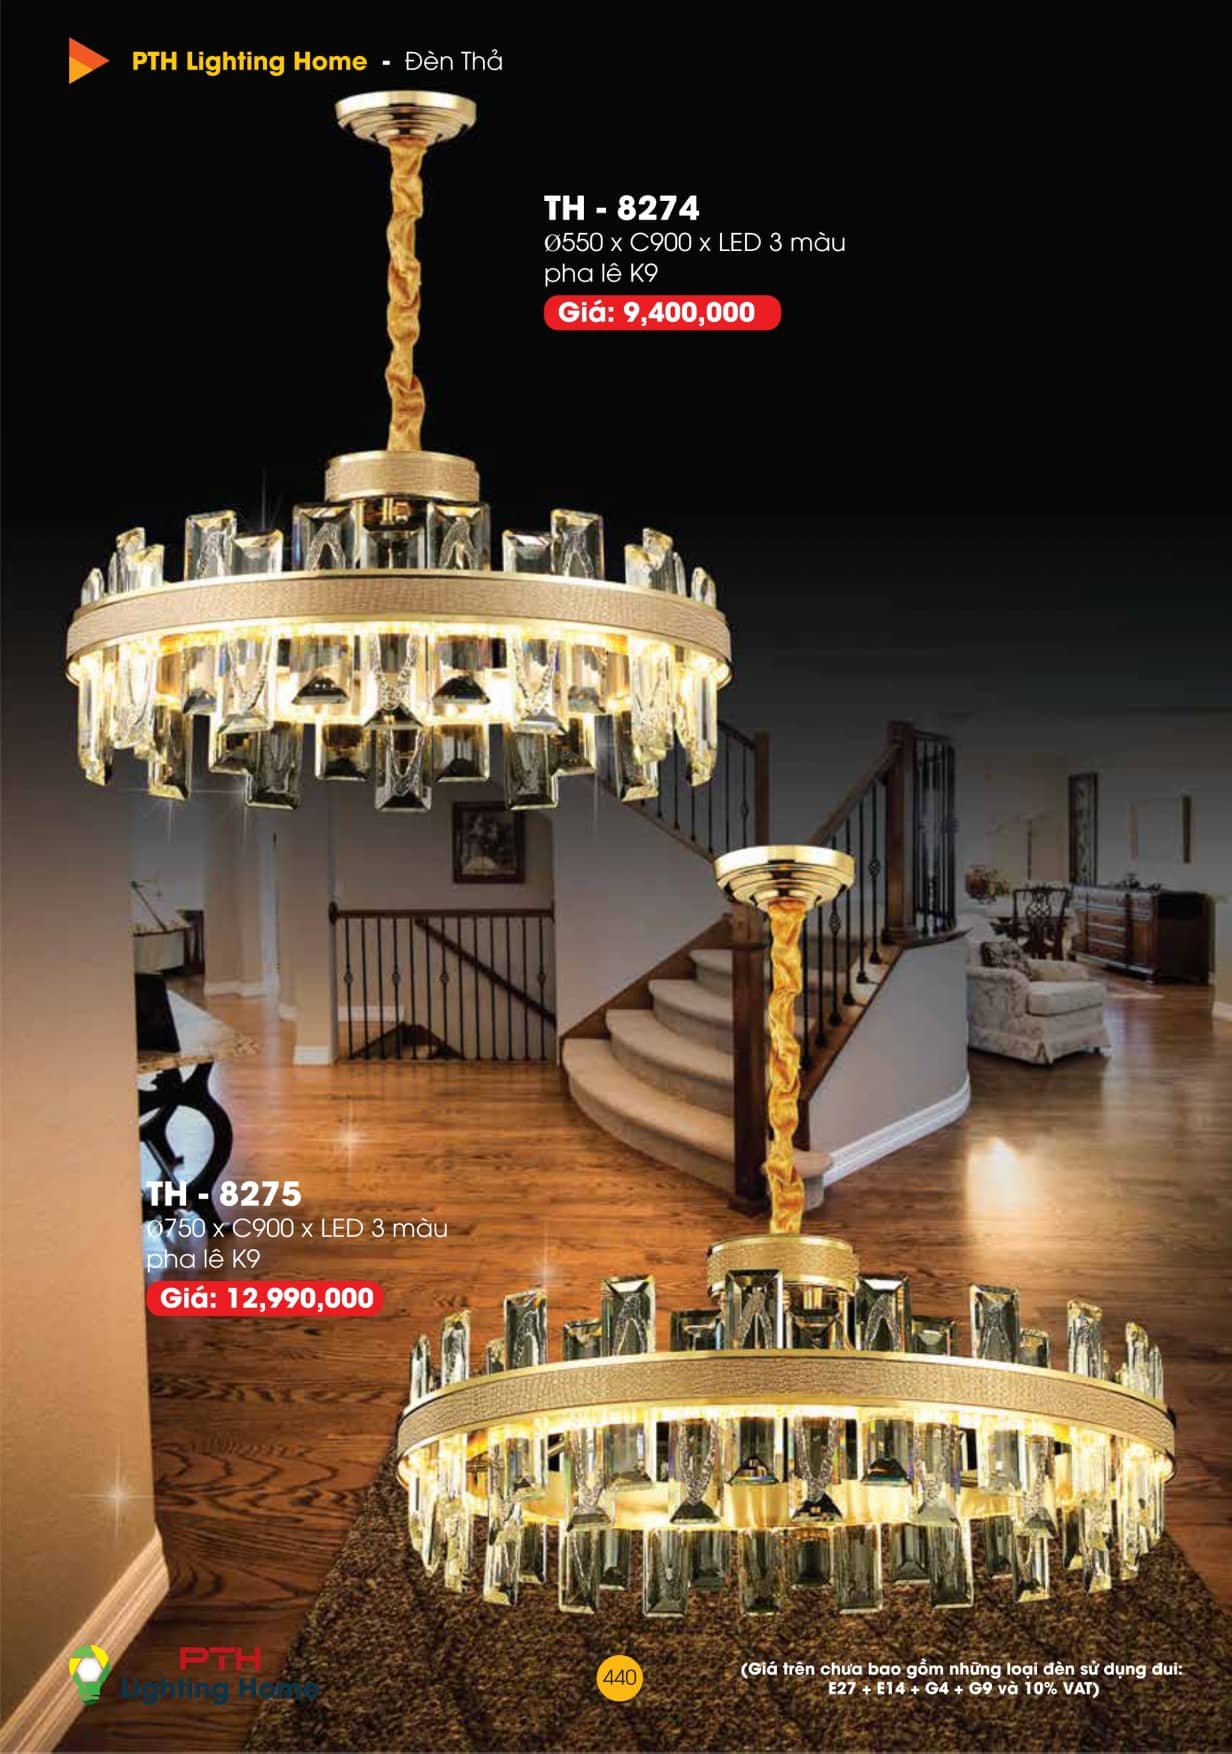 catalogue-bang-gia-den-led-trang-tri-pth-lighting-home-442